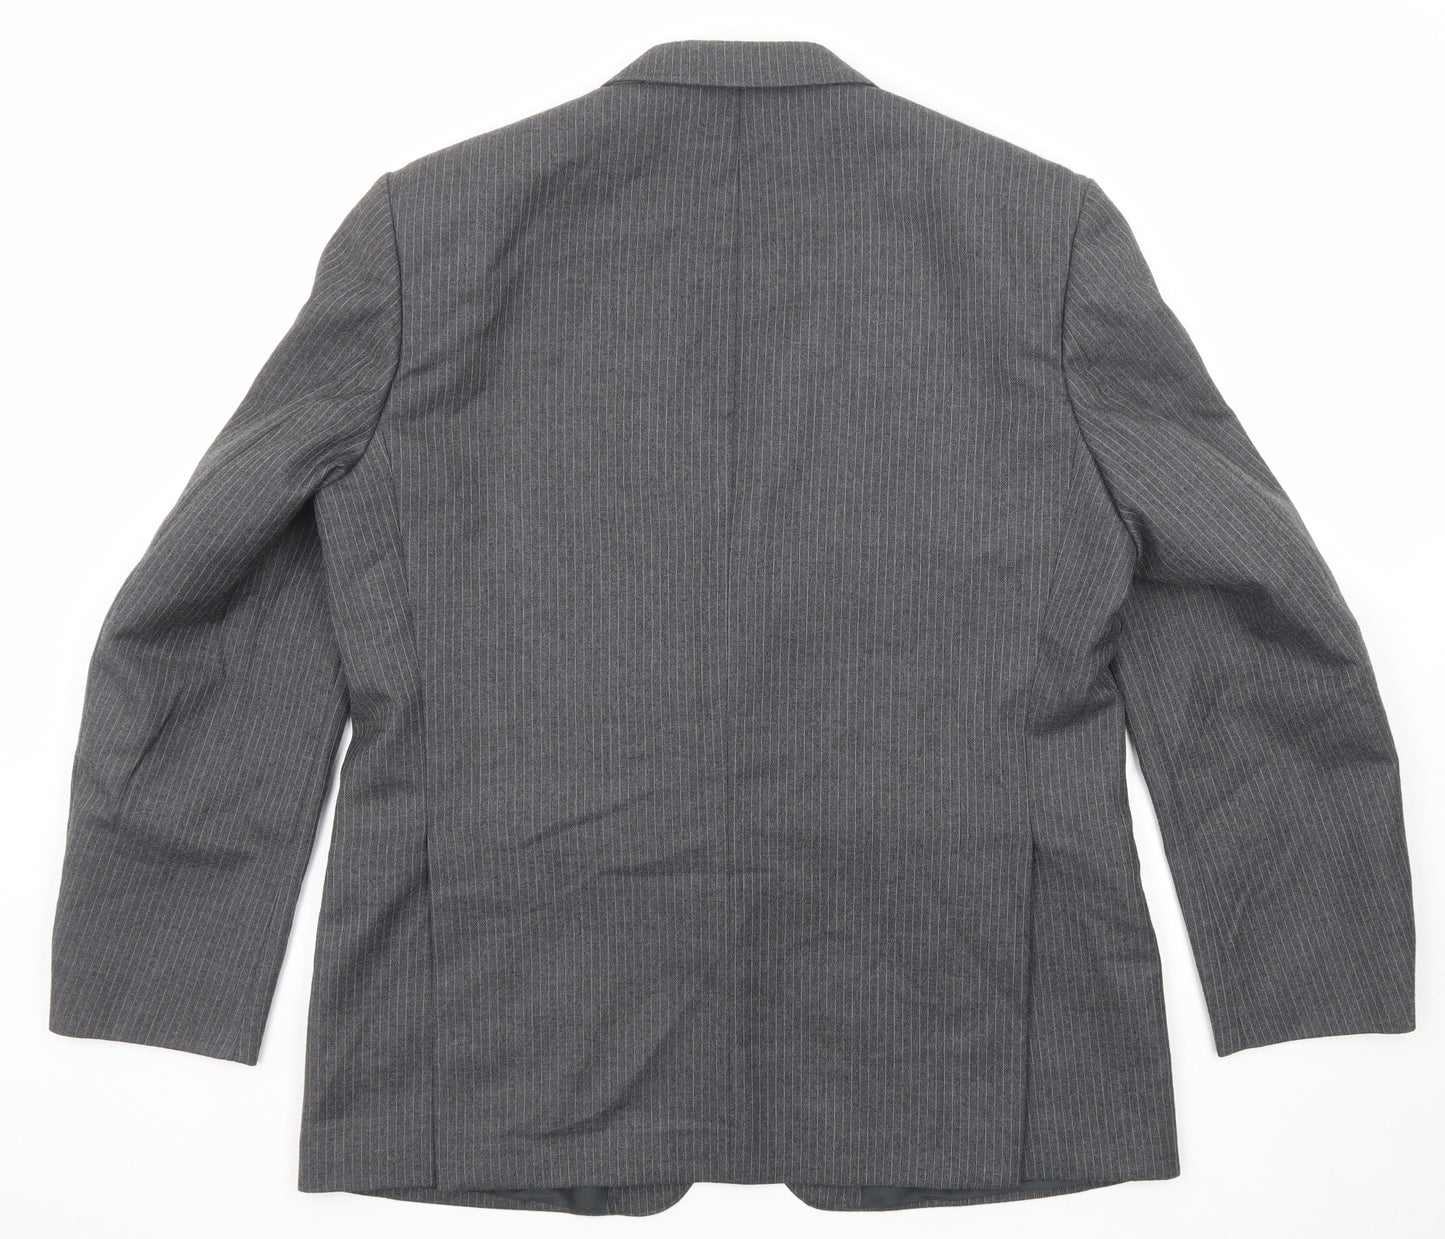 C&A Mens Grey Striped Polyester Jacket Suit Jacket Size 44 Regular